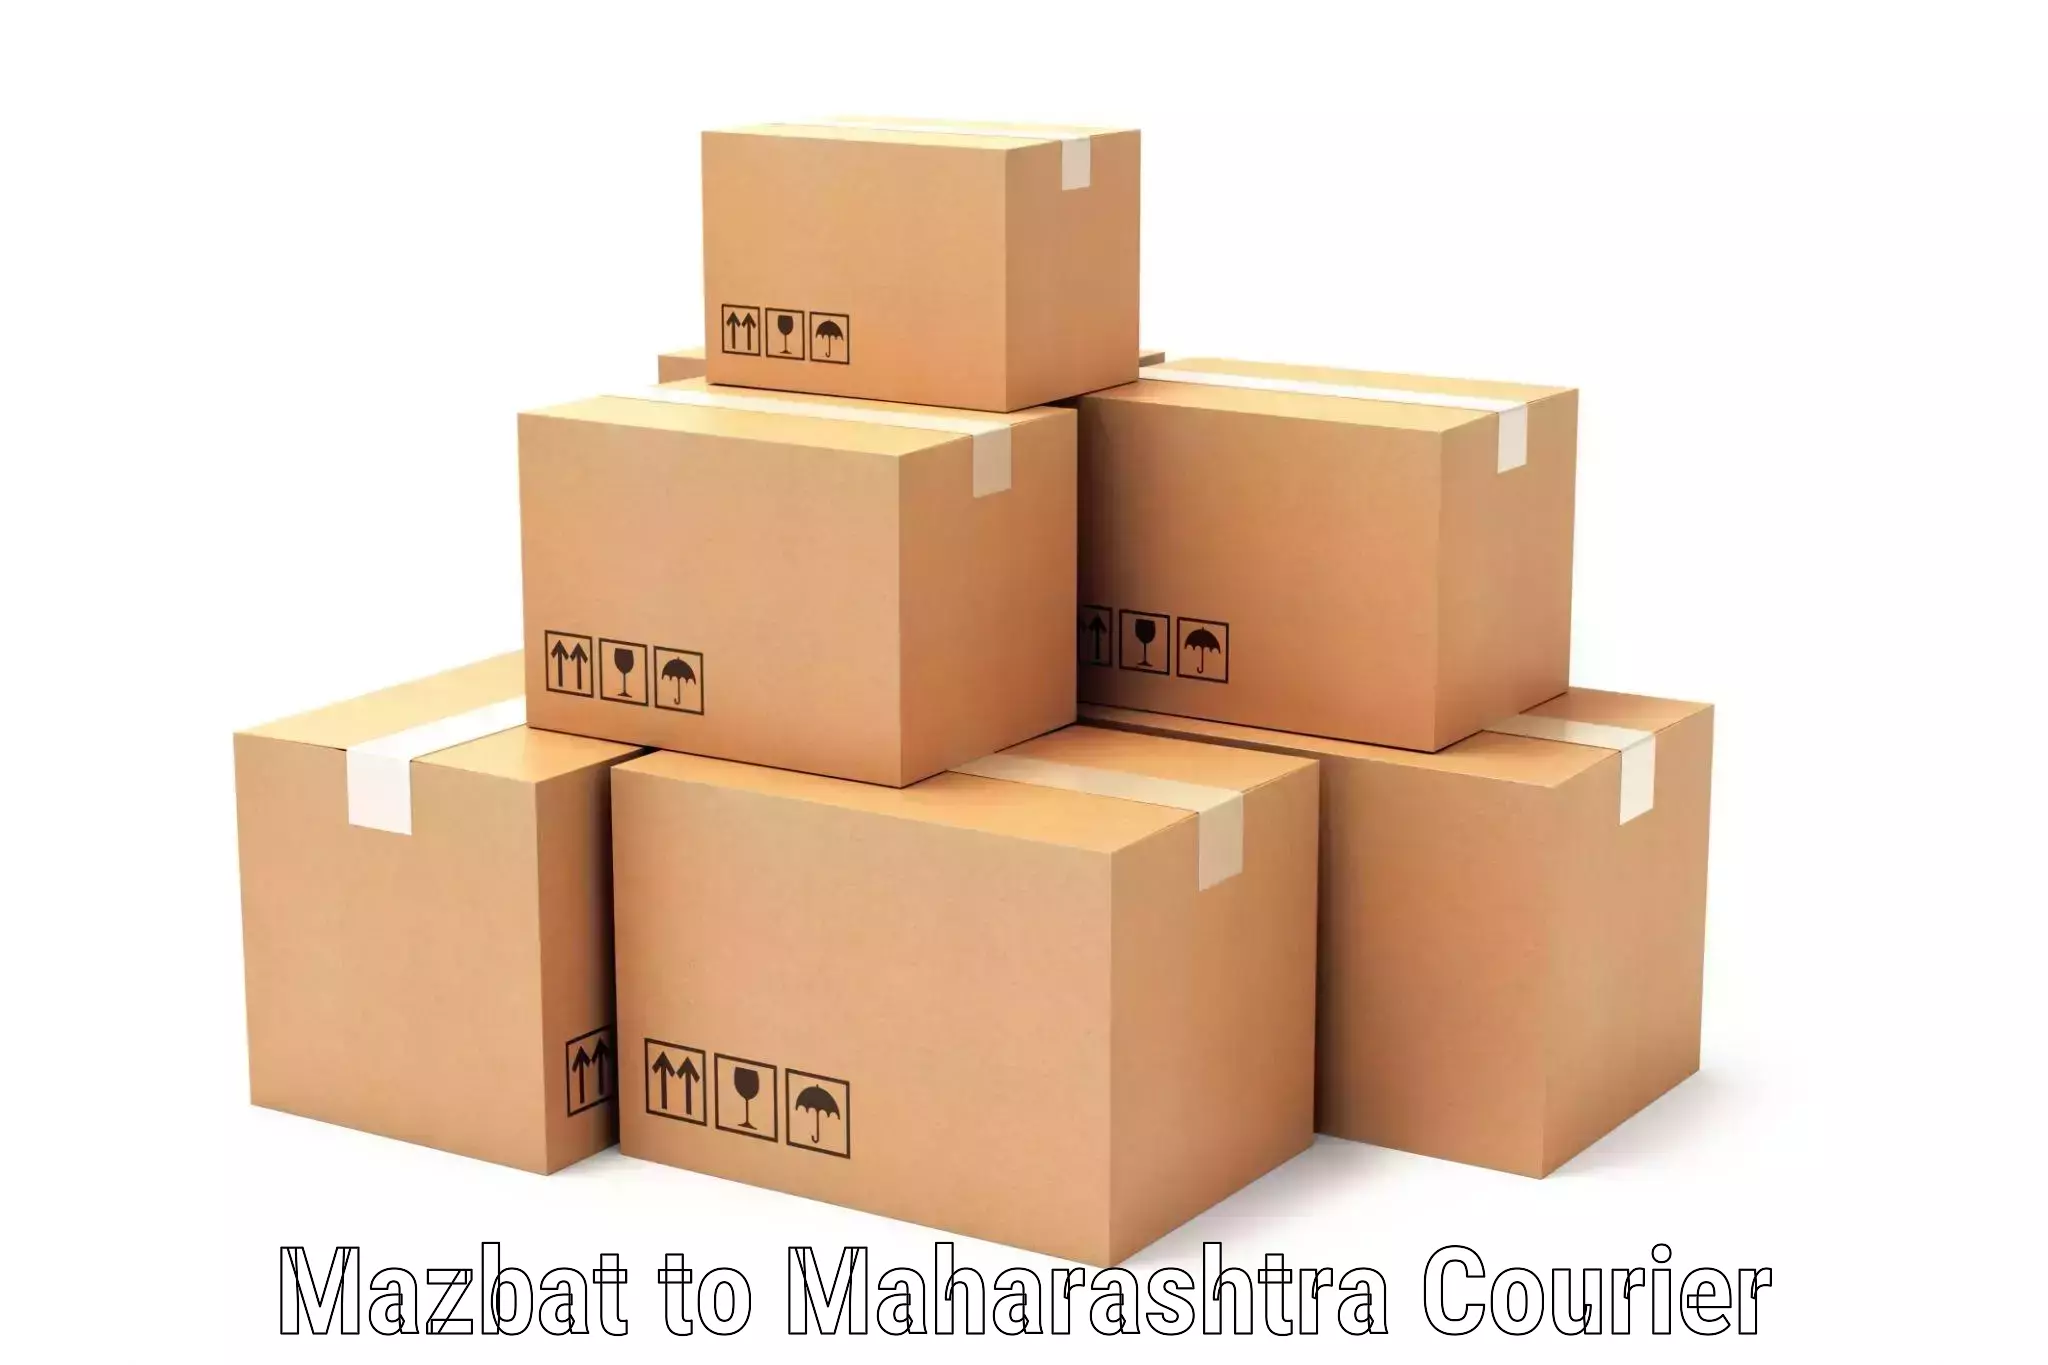 Logistics service provider Mazbat to Pune